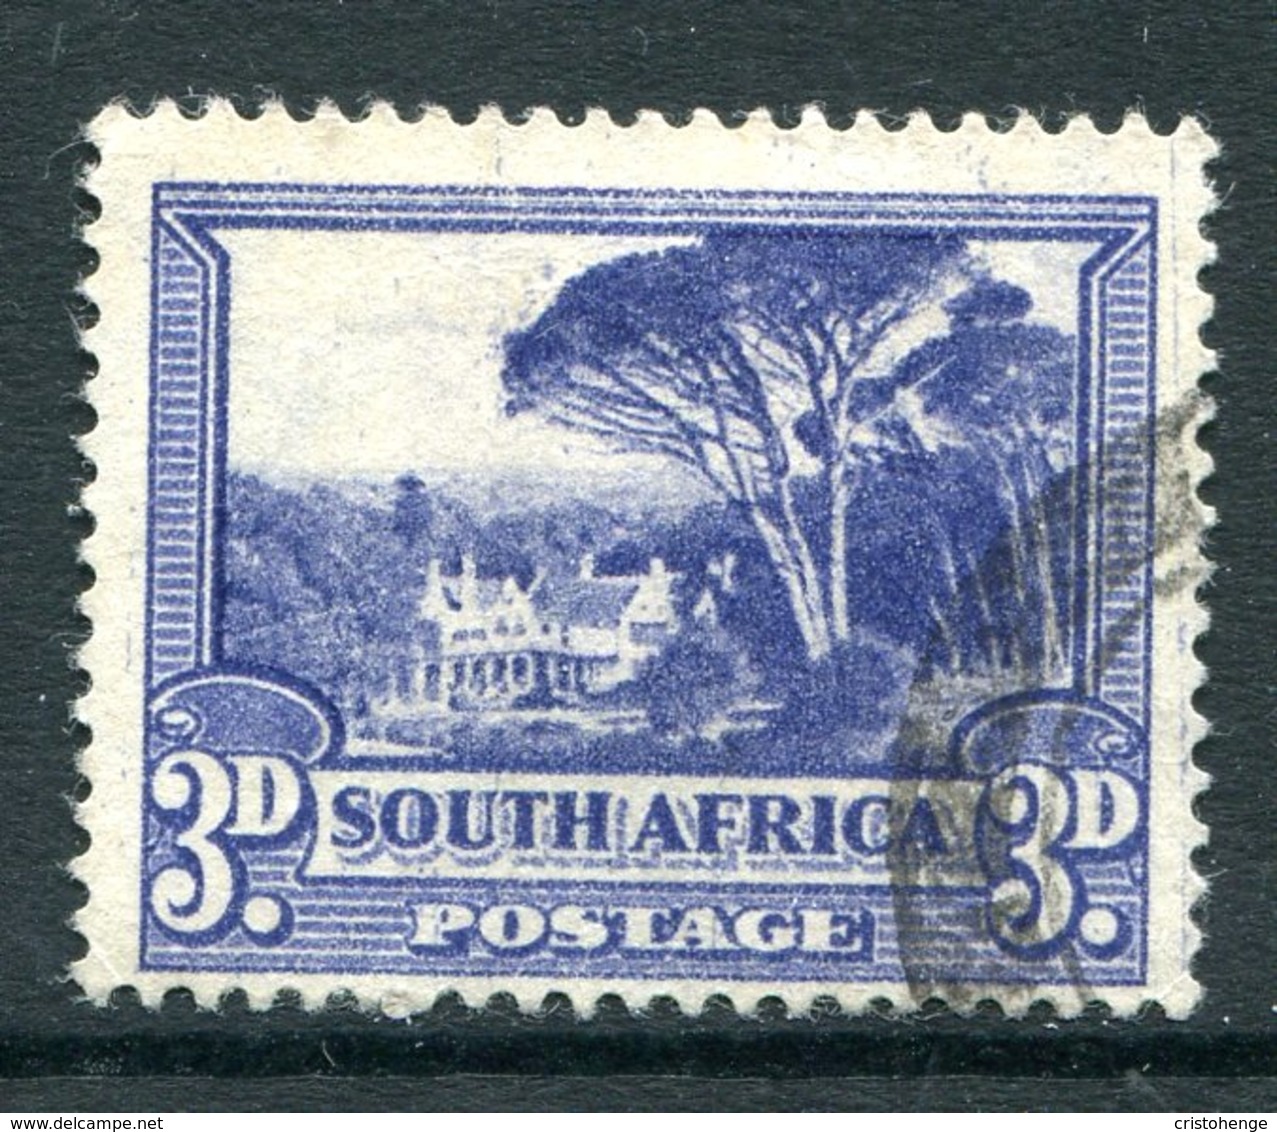 South Africa 1947-54 Screened Printing - 3d Groot Schuur - Dull Blue - Used (SG 117) - Ongebruikt